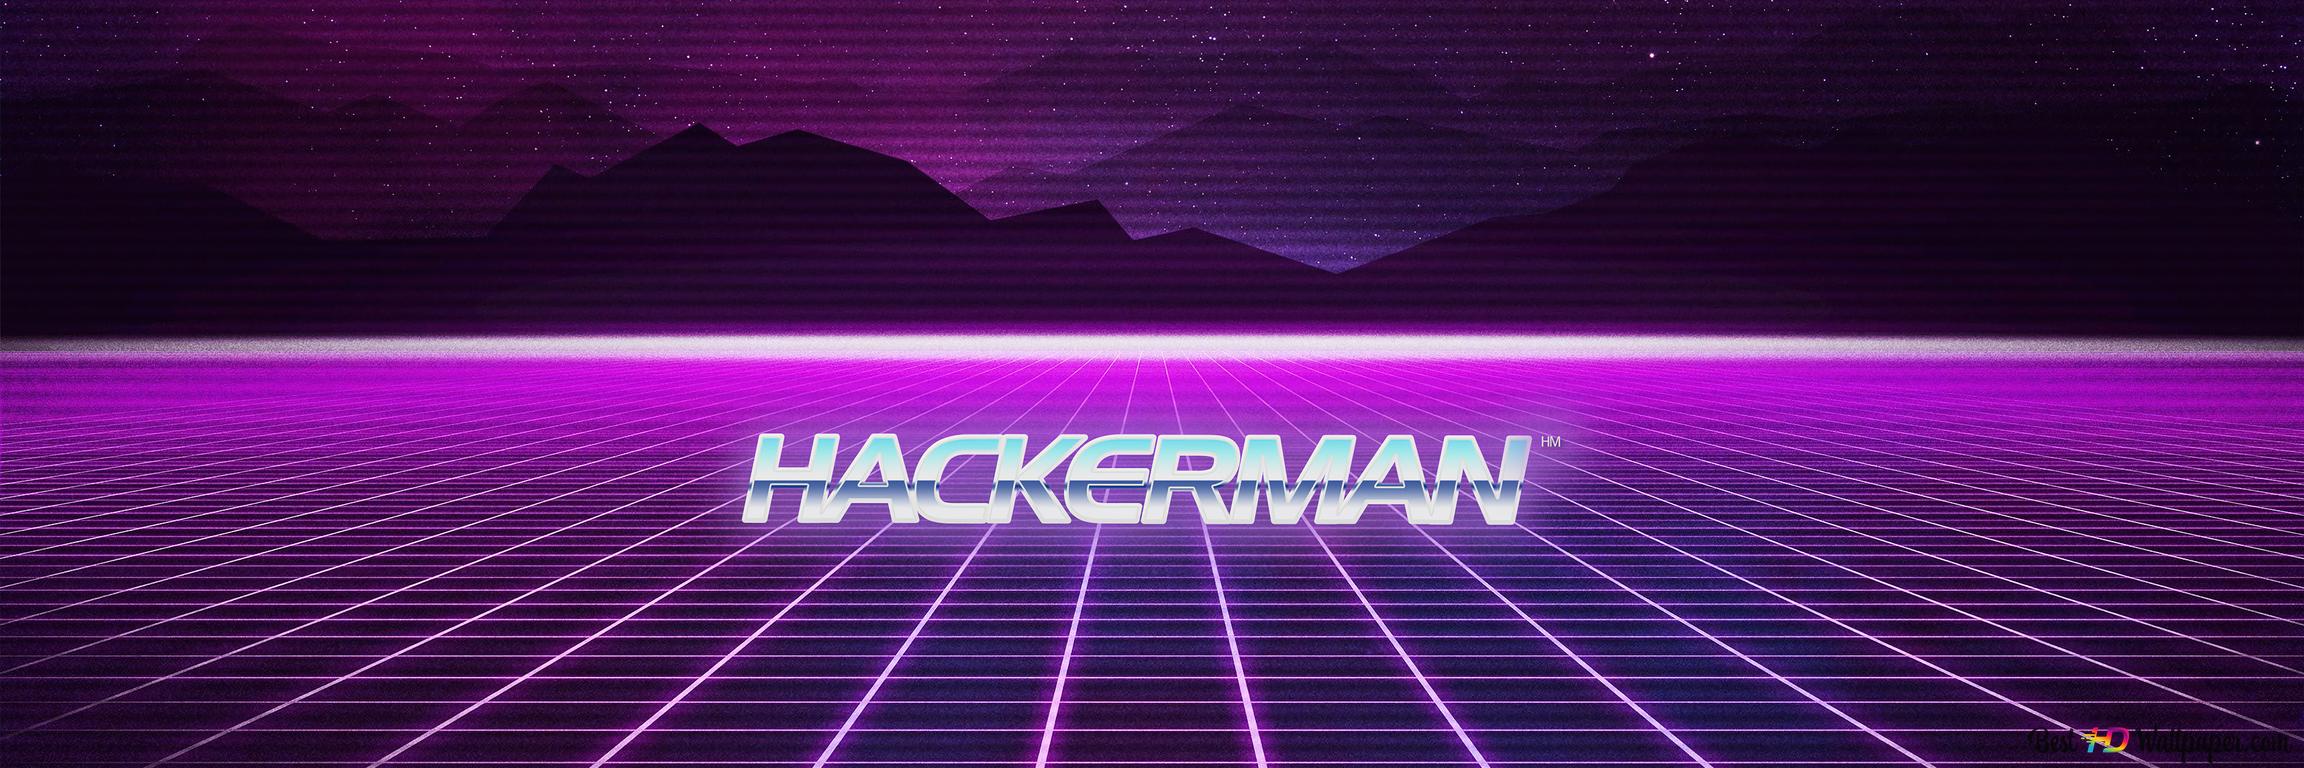 :hackerman